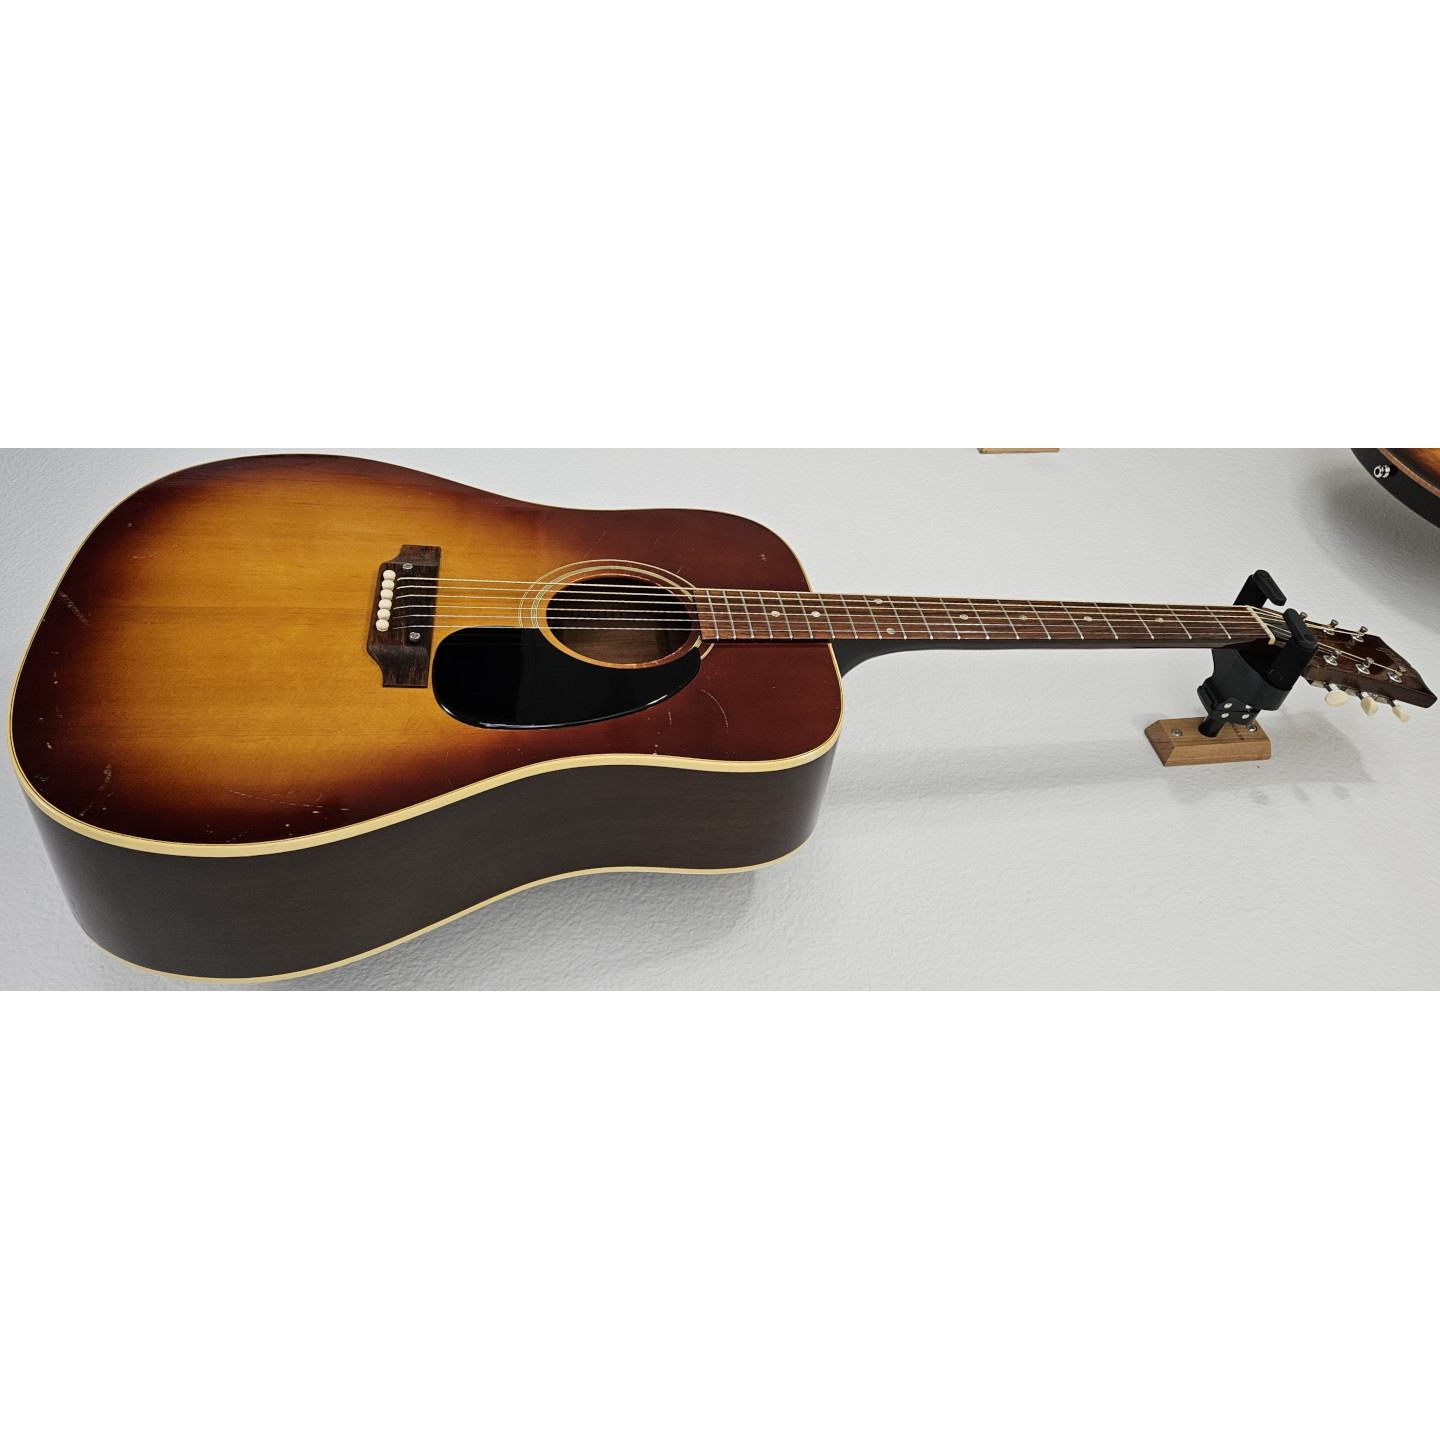 1968 Gibson J-45 ADJ Deluxe Cherry Sunburst Dreadnought Vintage Acoustic Guitar